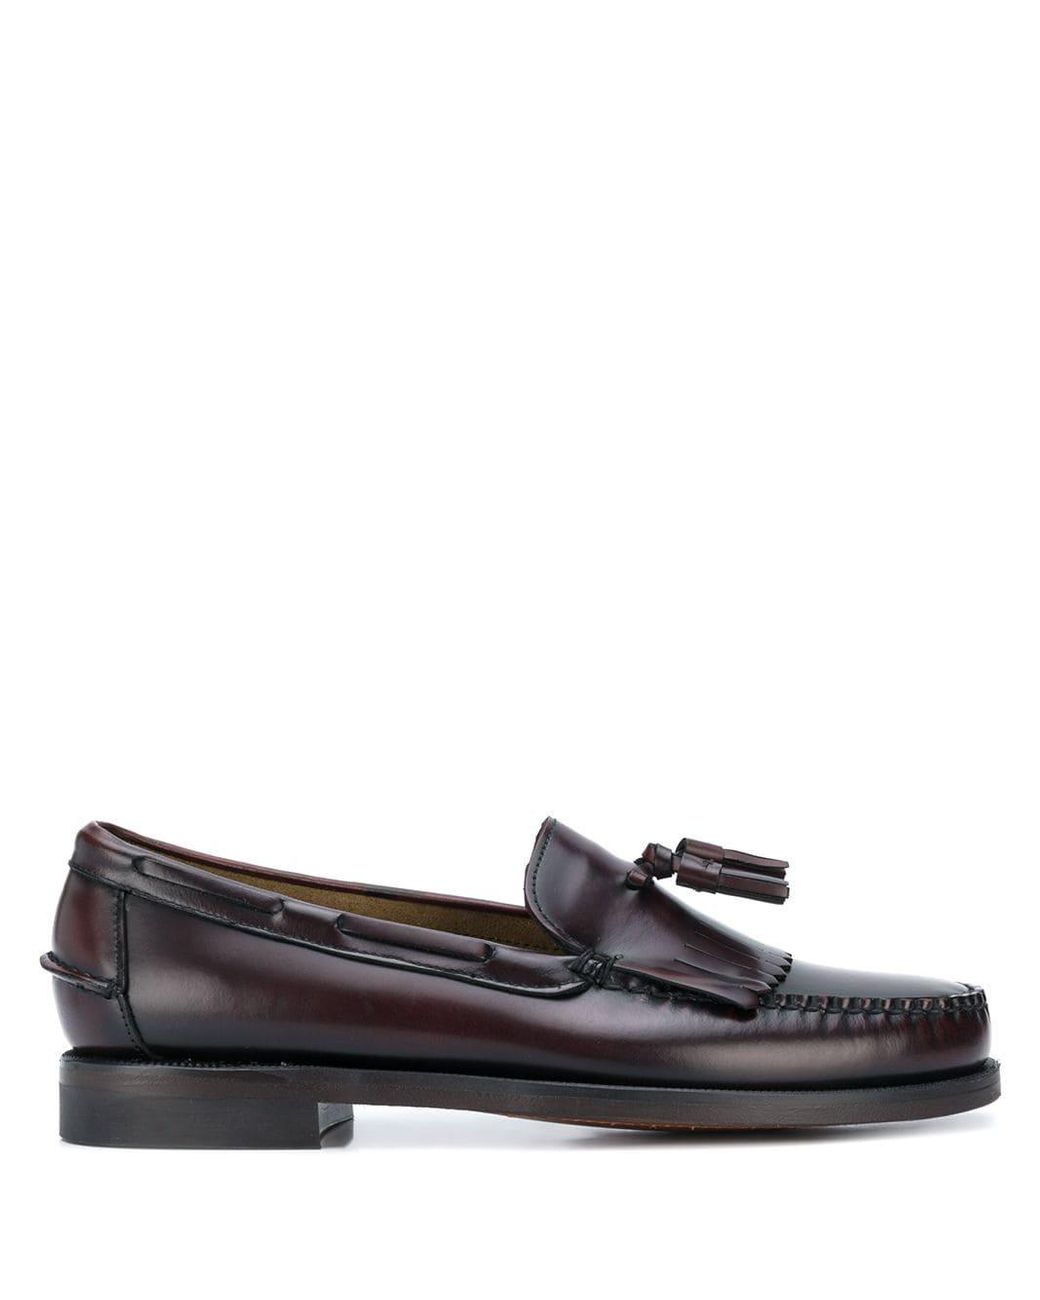 Sebago Leather Tassel-detail Loafers in Brown for Men - Lyst